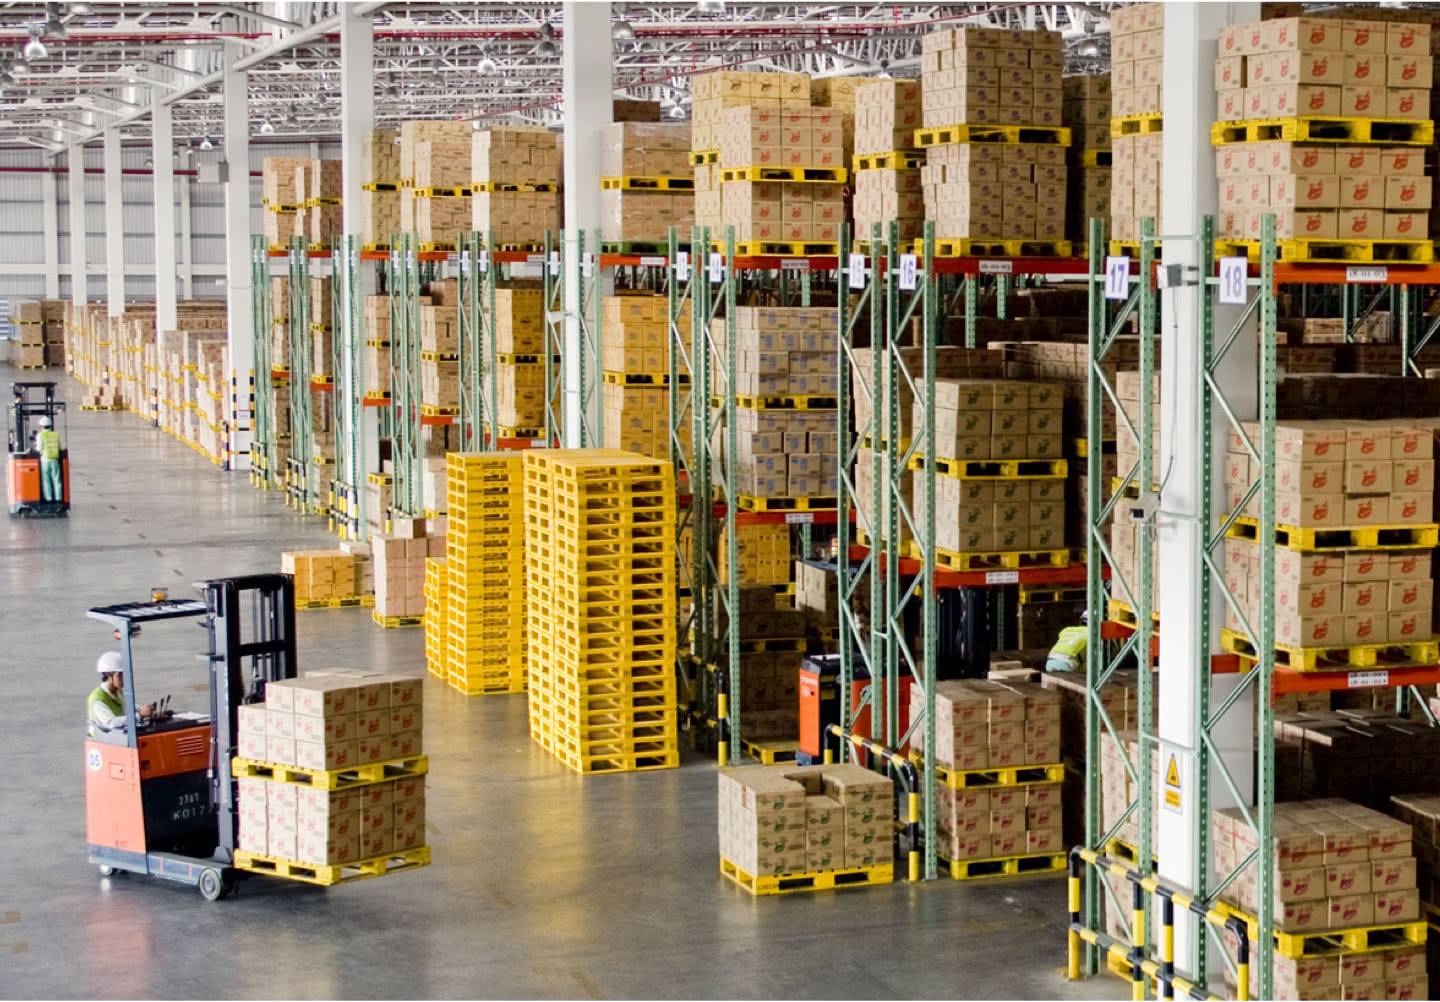 Cyzerg Focuses on Warehouse Technology